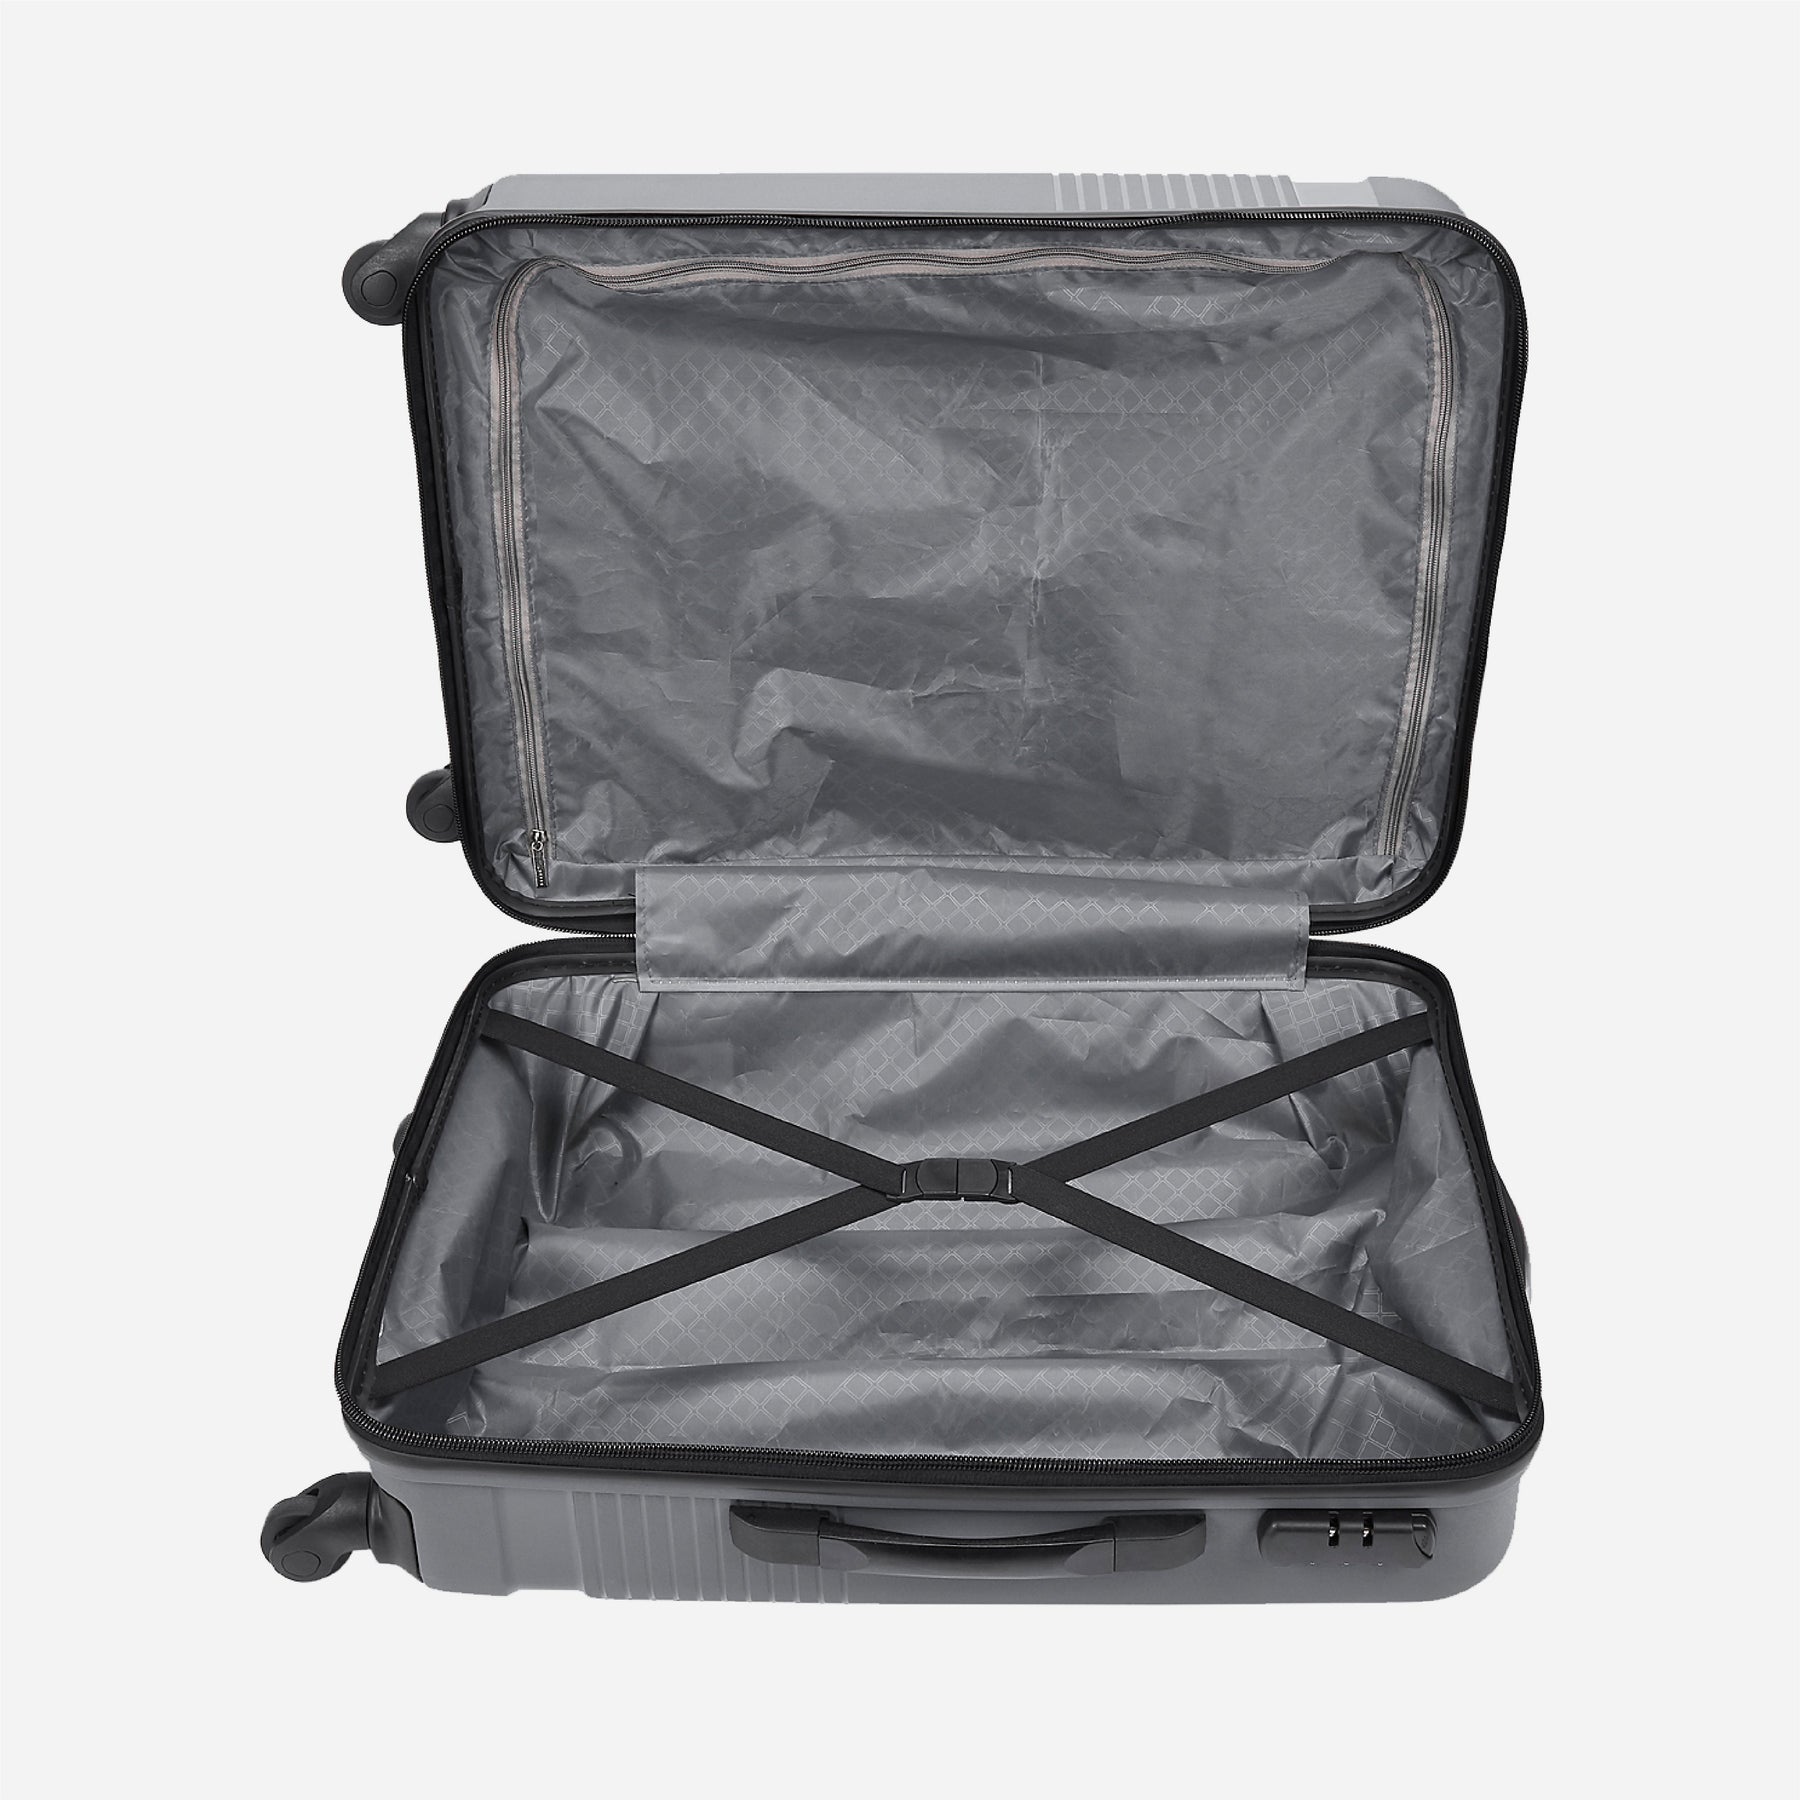 Zion Lightweight PP Hard Luggage Combo Set (Small, Medium and Large) - Dark Grey